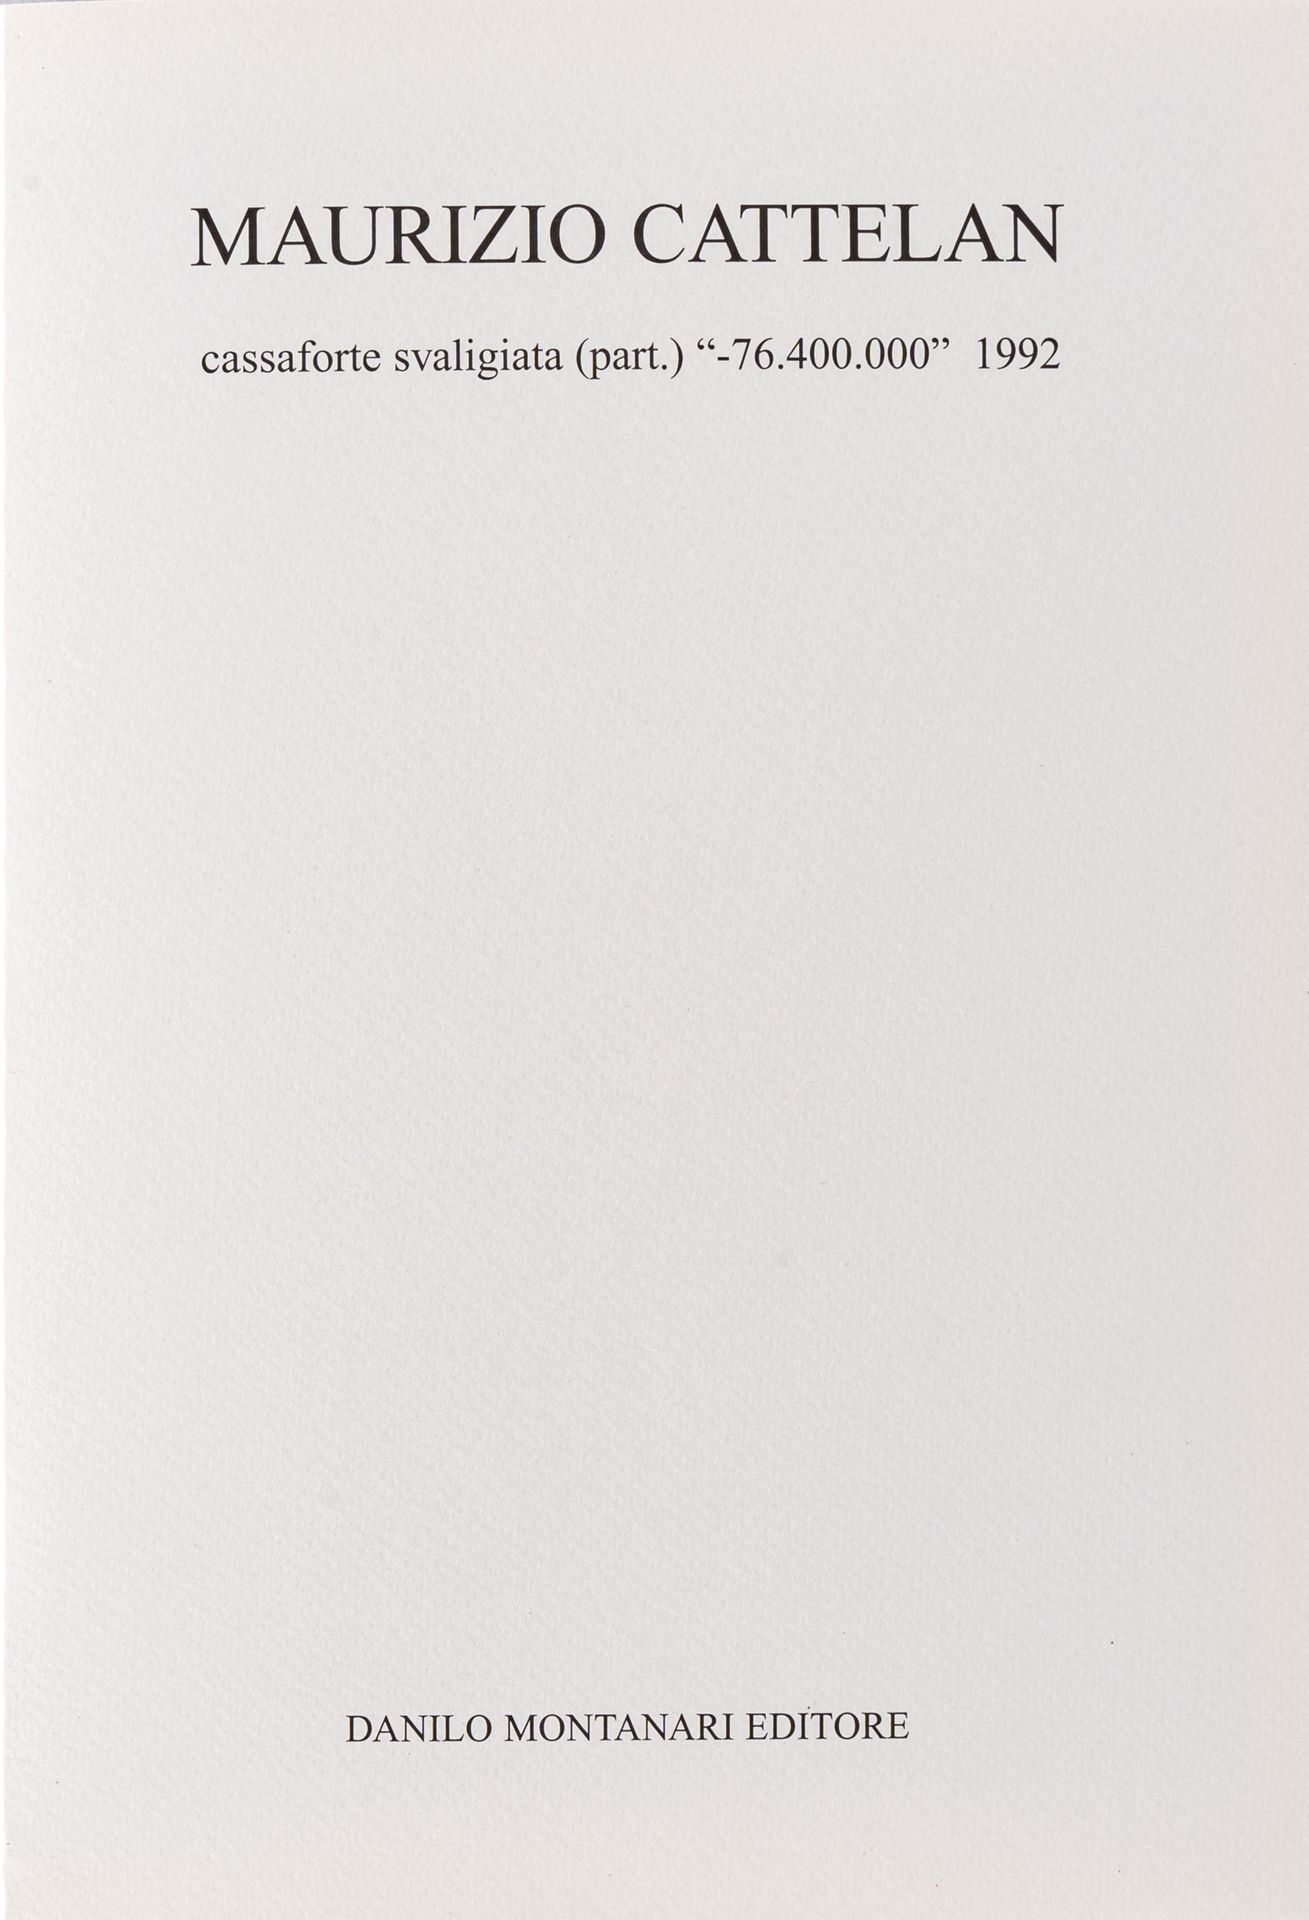 Maurizio Cattelan MAURIZIO CATTELAN

(1960)

-76,400,000 - safe robbed (part.)

&hellip;